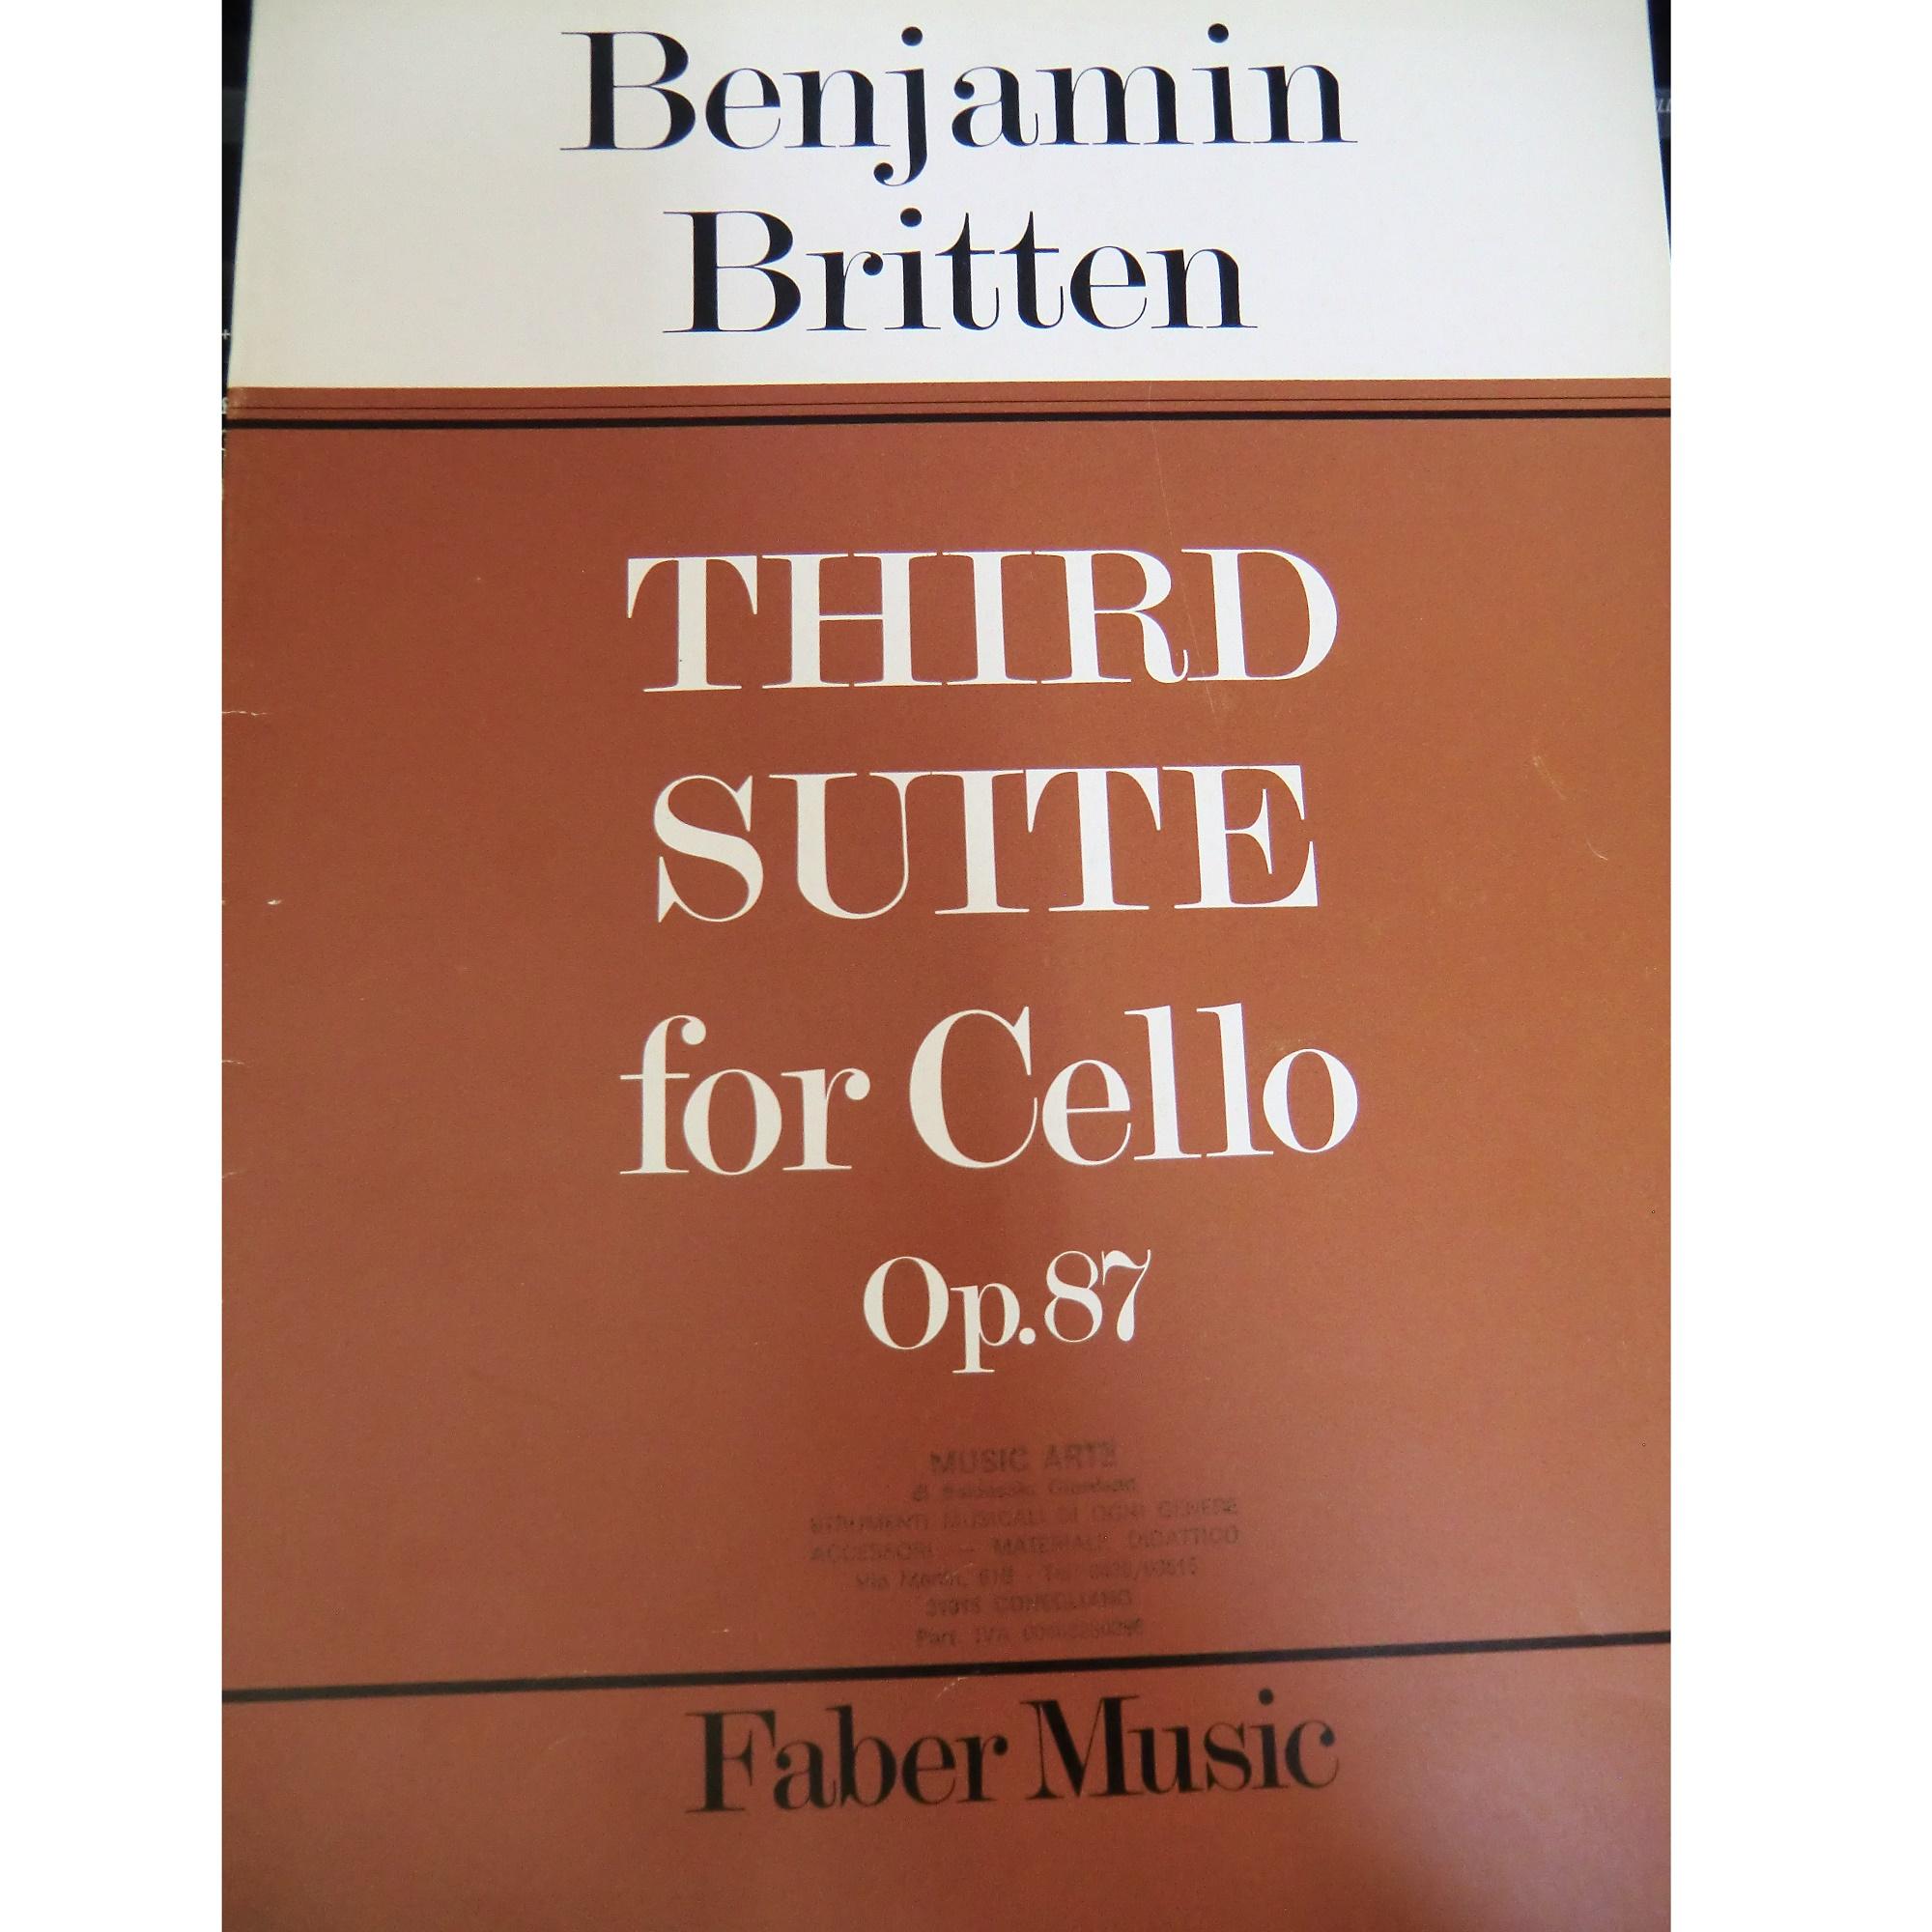 Benjamin Britten Third Suite for Cello Op. 87 - Faber Music